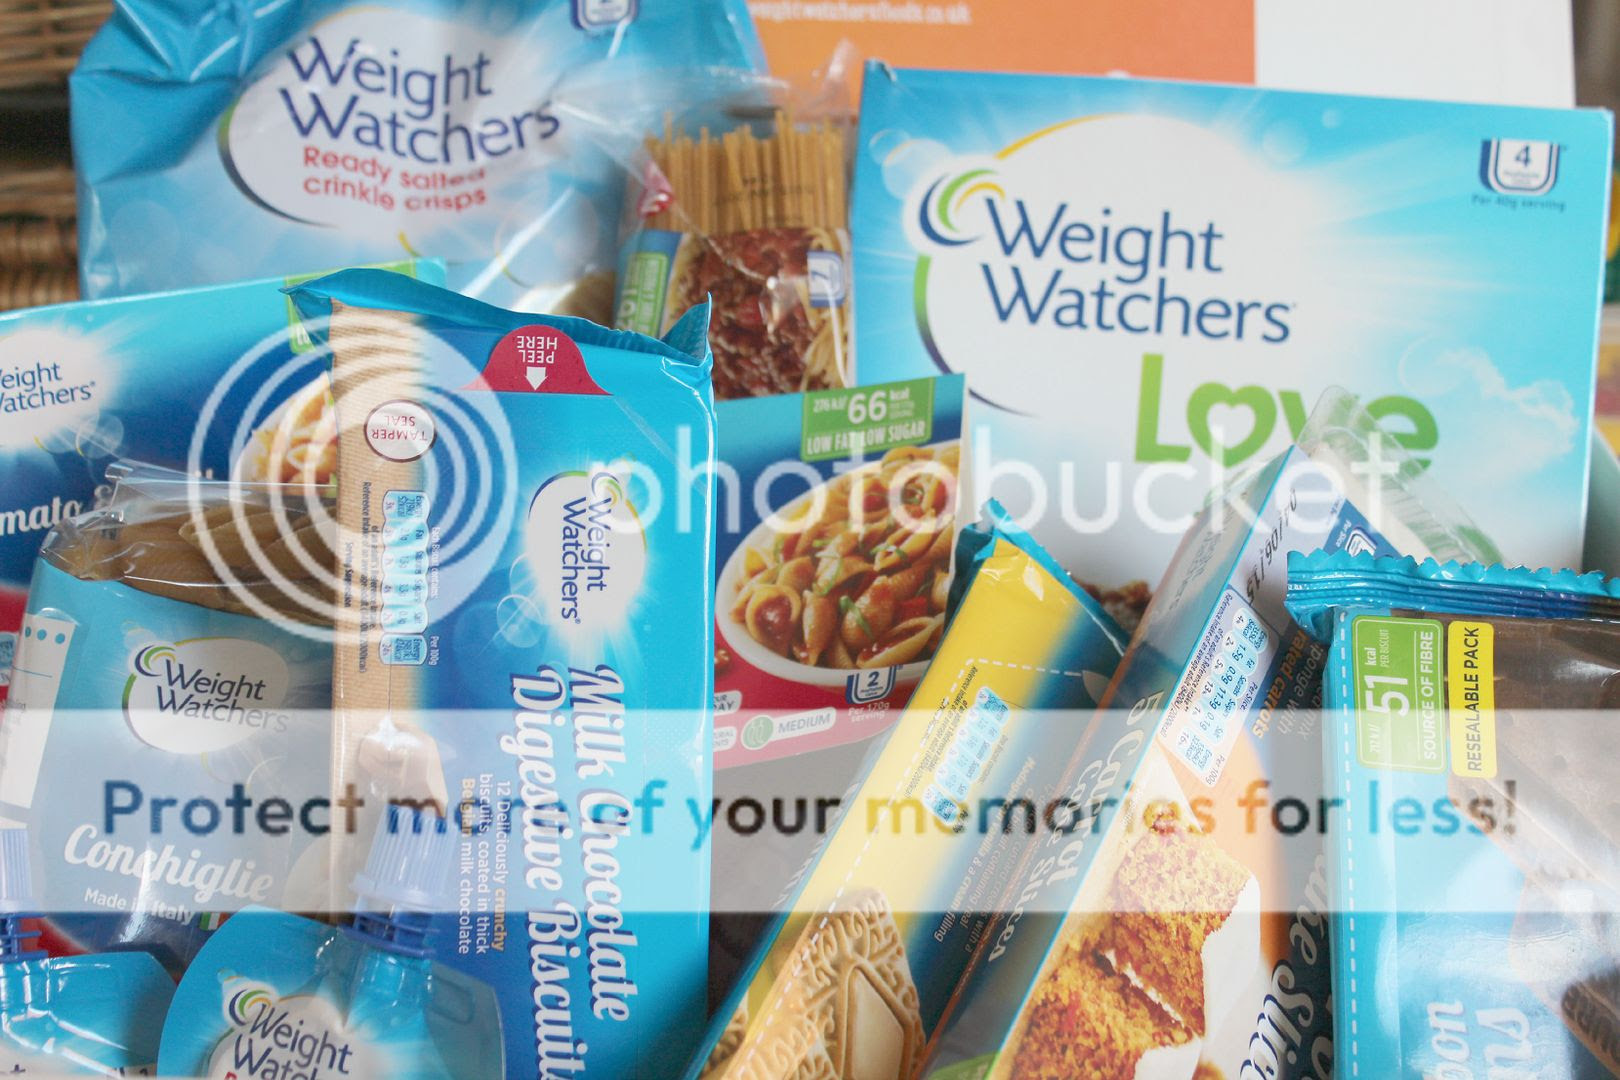 Weight Watchers snacks